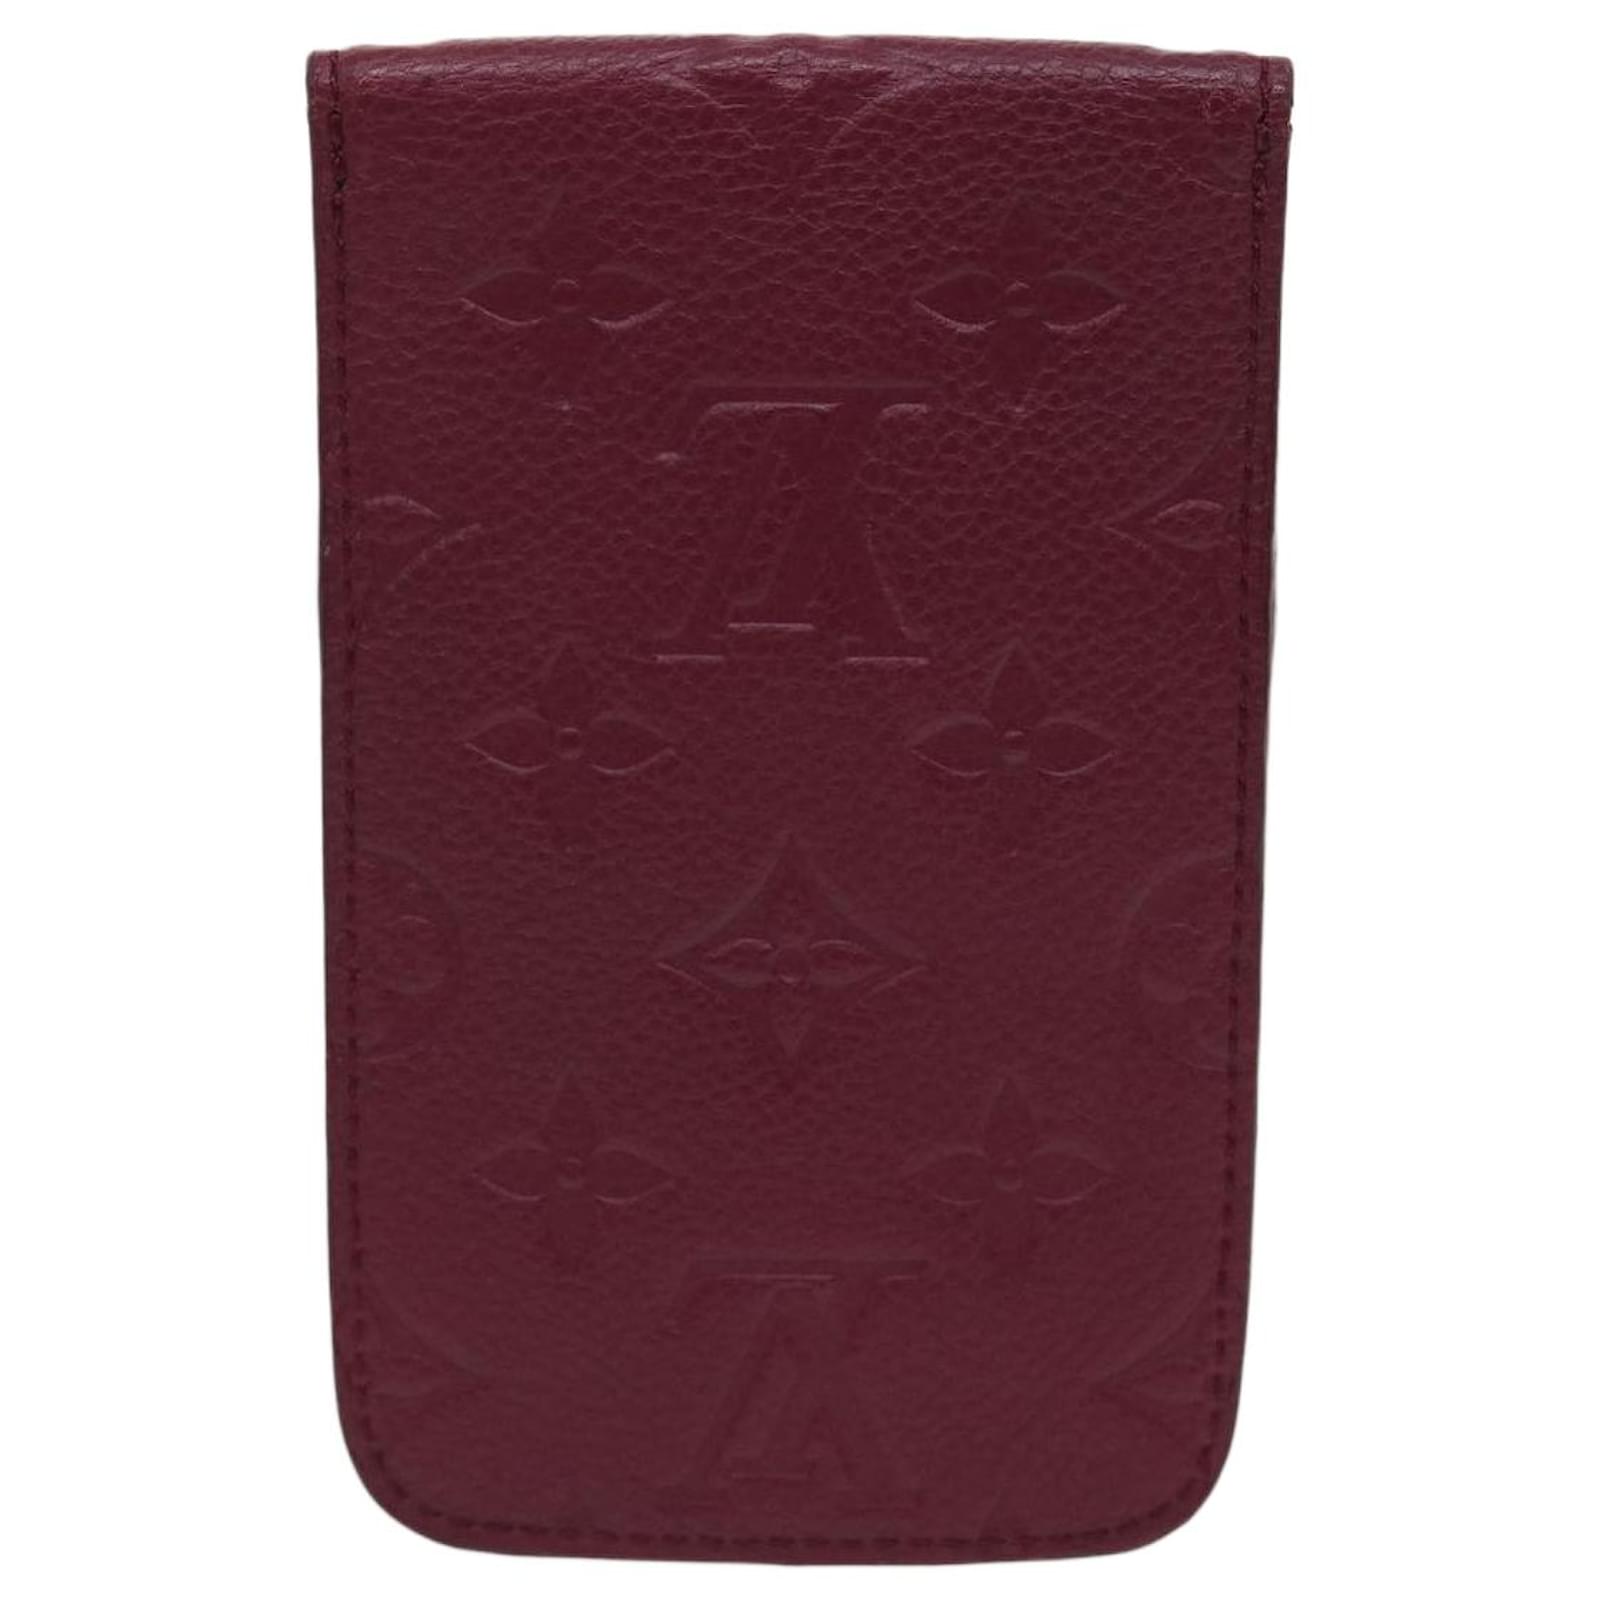 Louis Vuitton Folio Cell Phone Cases